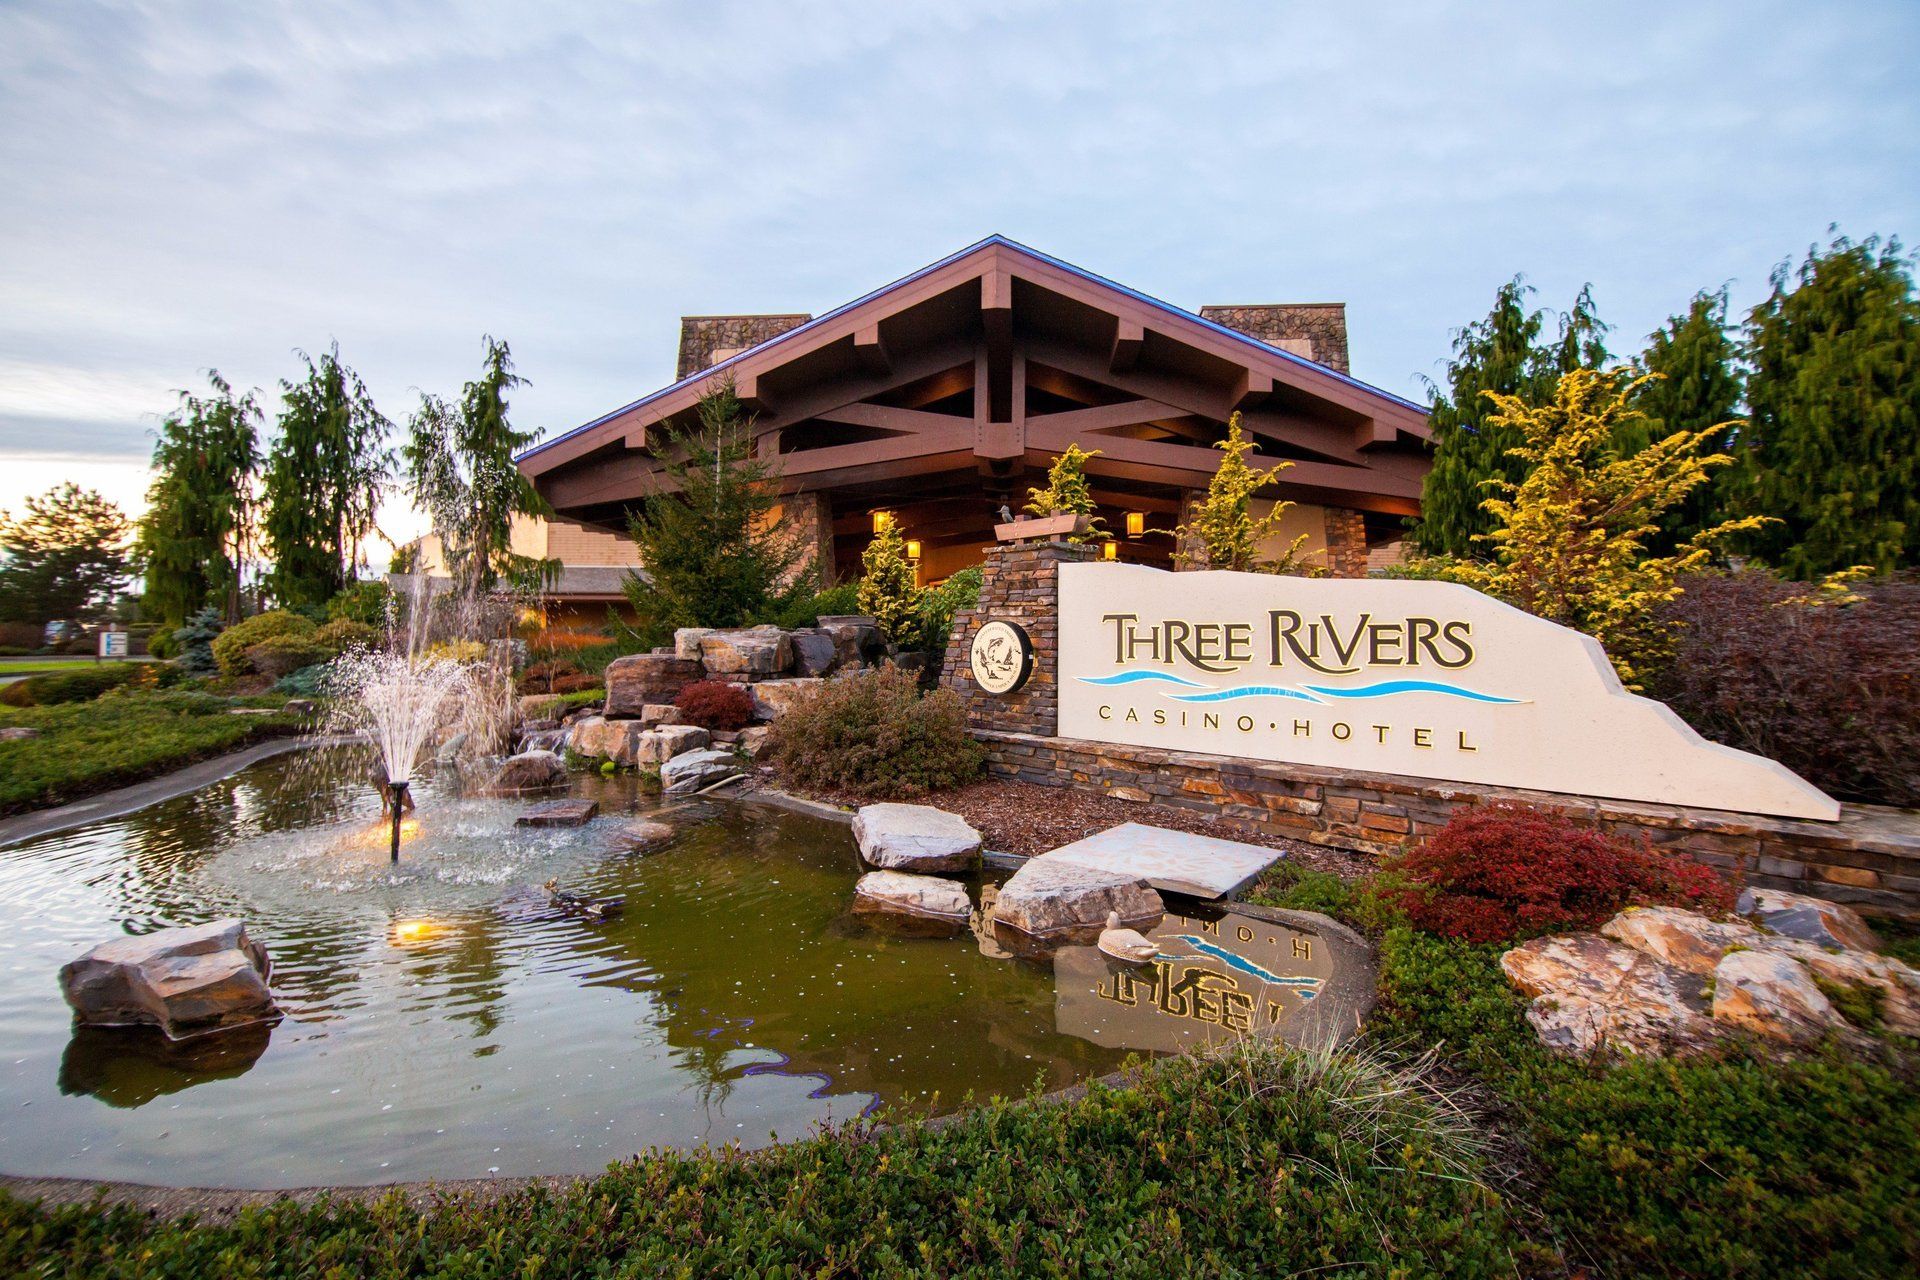 three rivers casino hotel address pittsburgh pa